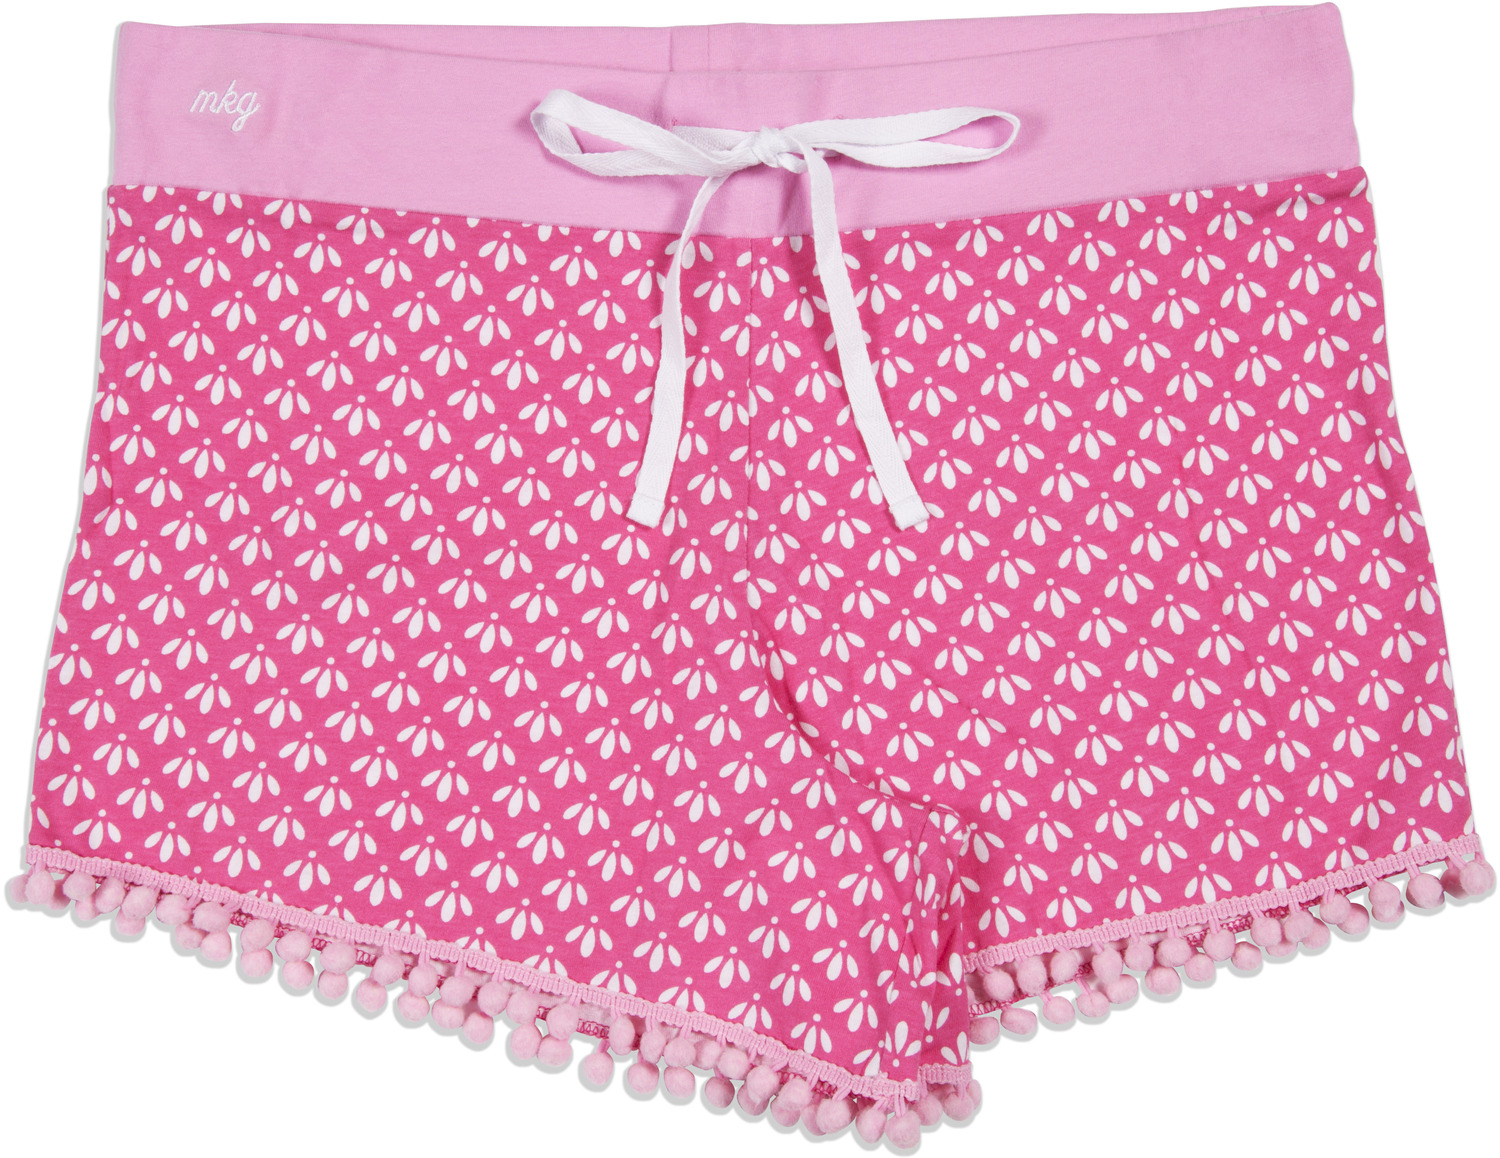 Girly Girl by My Kinda Girl - Girly Girl - S Pink Ladies Lounge Shorts